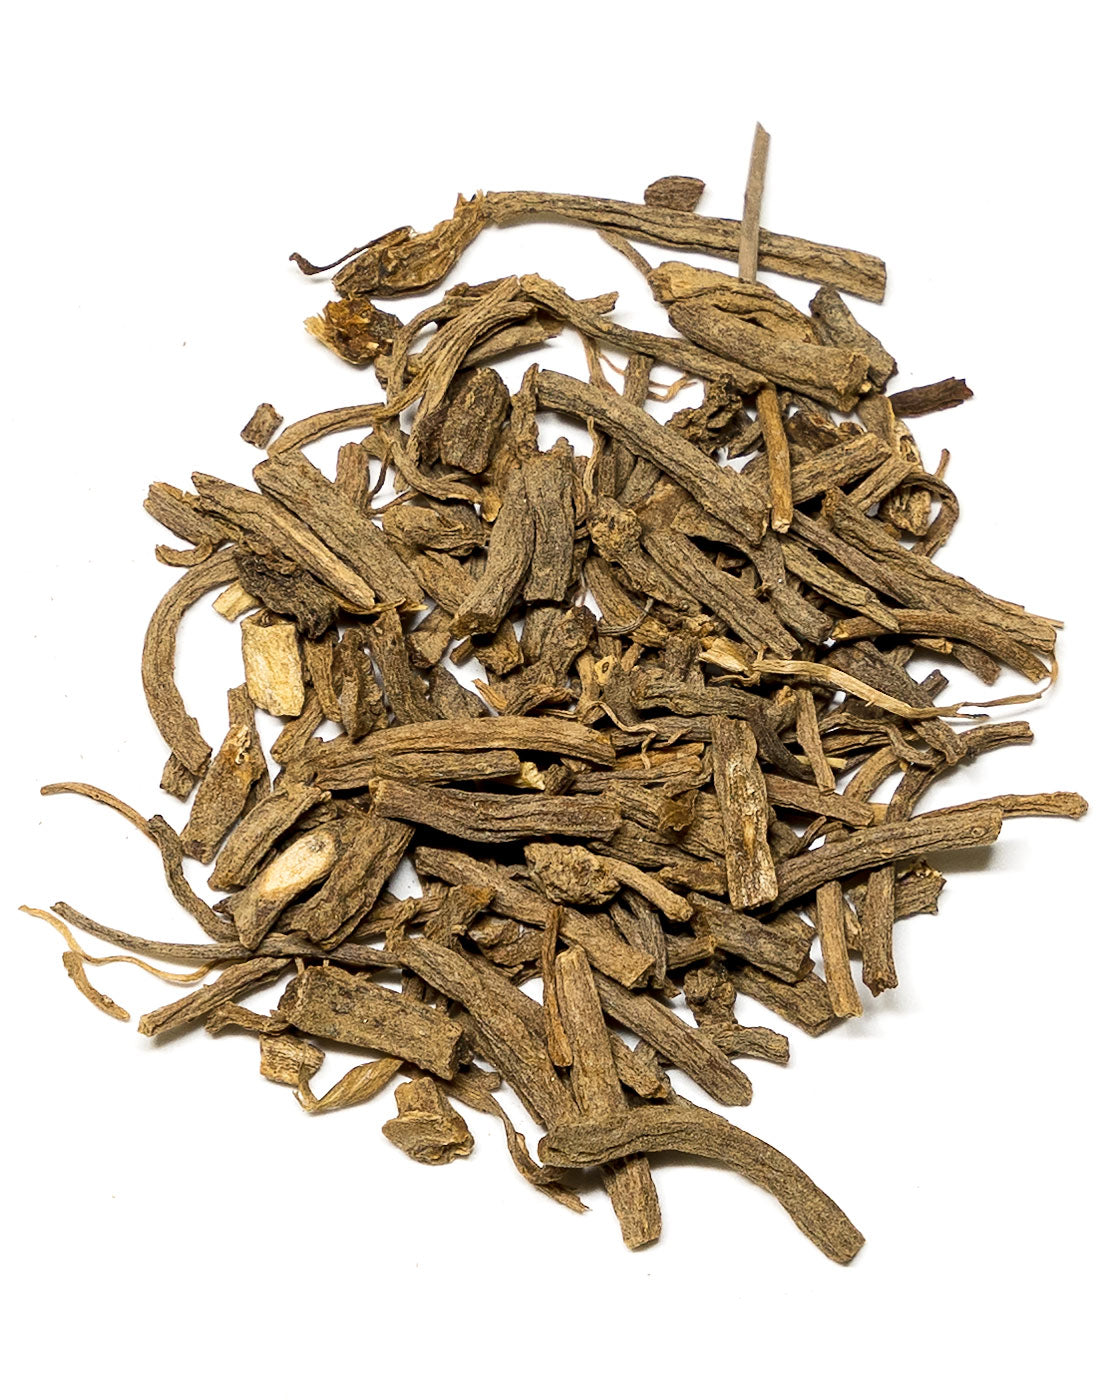 valerian root tea